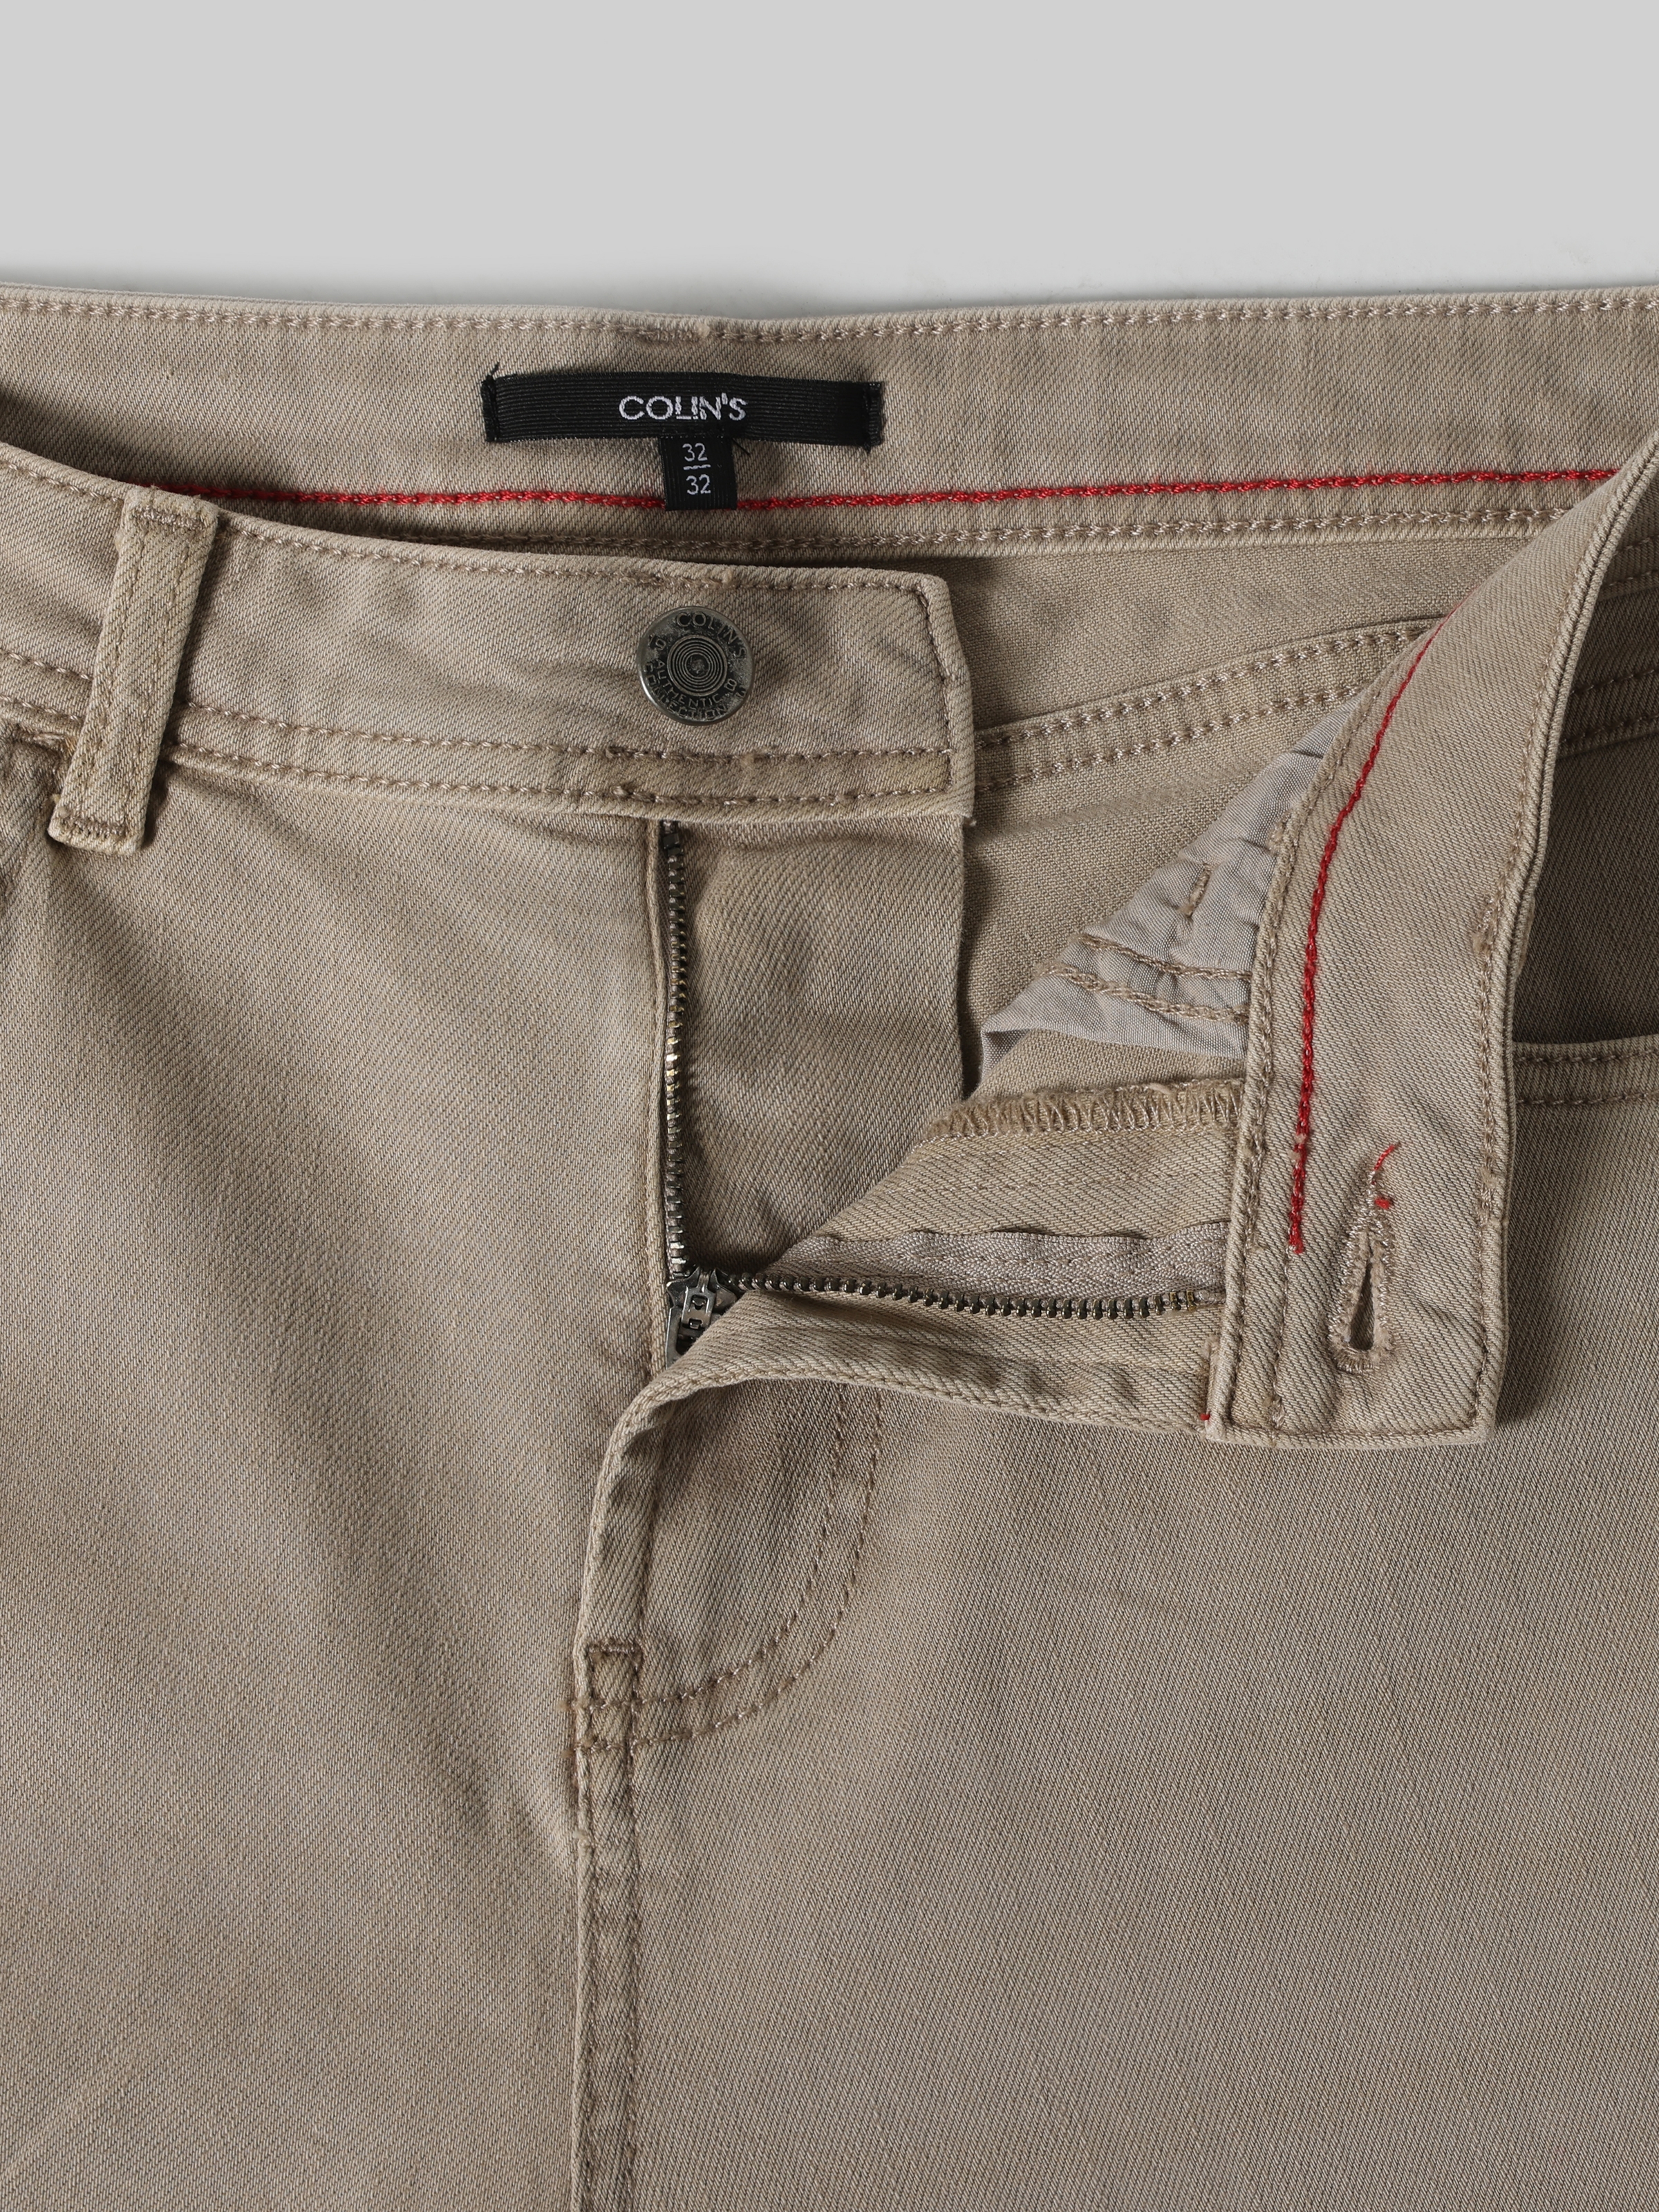 Afișați detalii pentru Pantaloni De Barbati Bej   